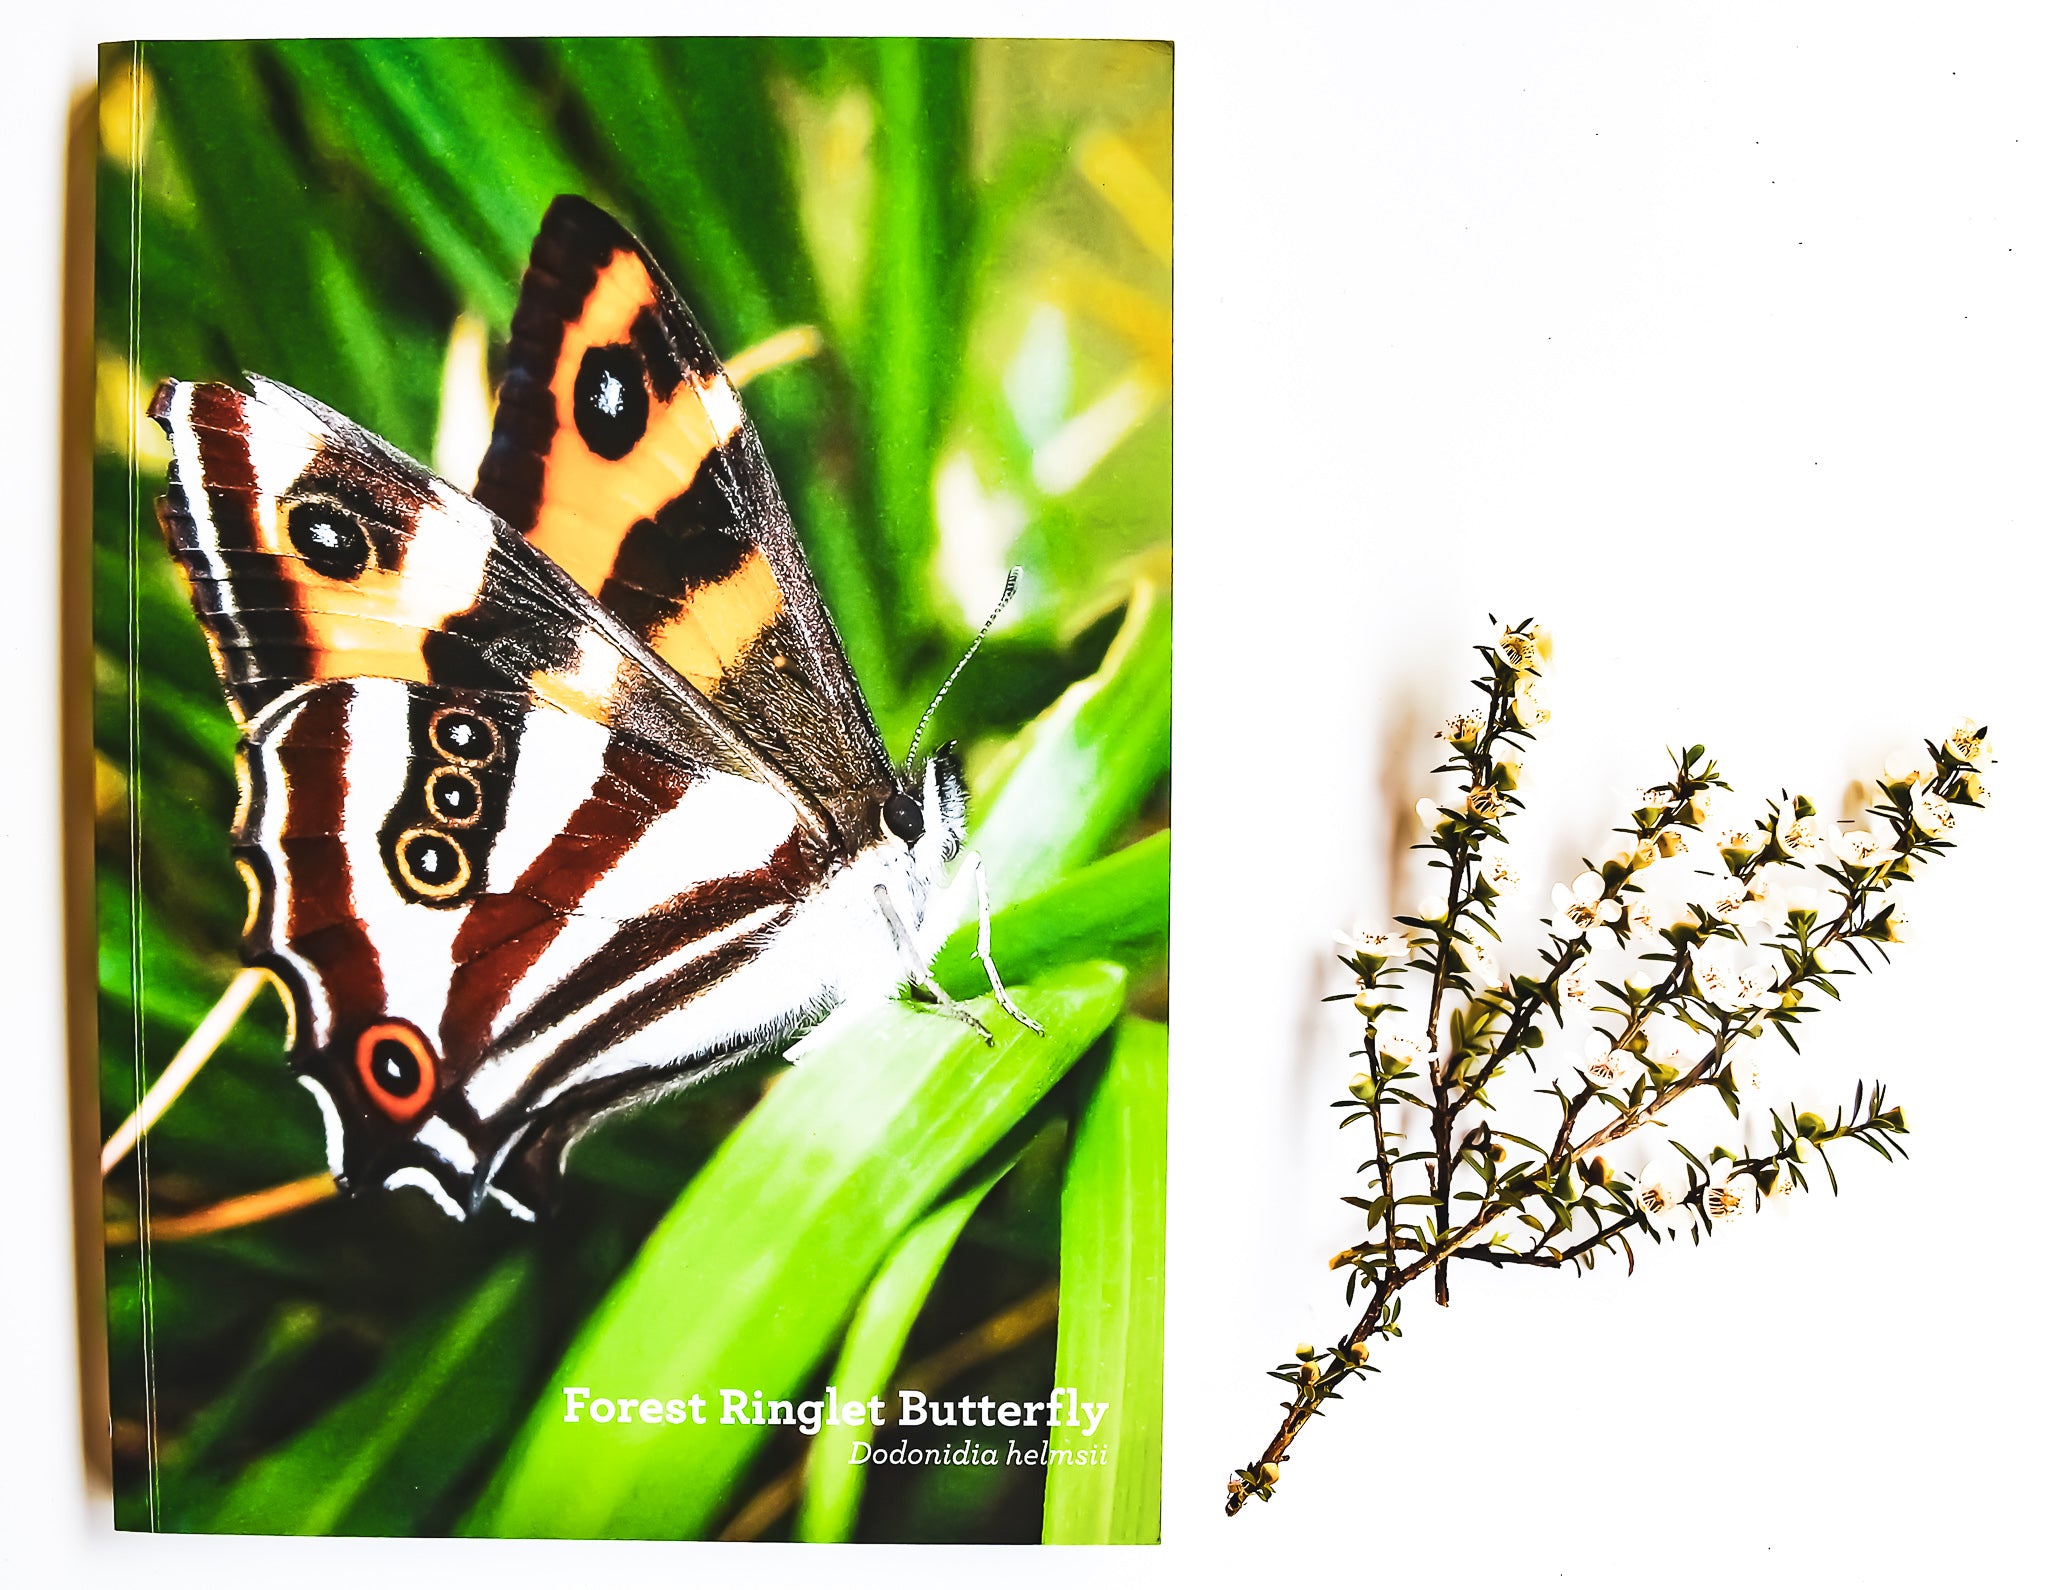 Forest ringlet butterfly A5 journal with manuka alongside